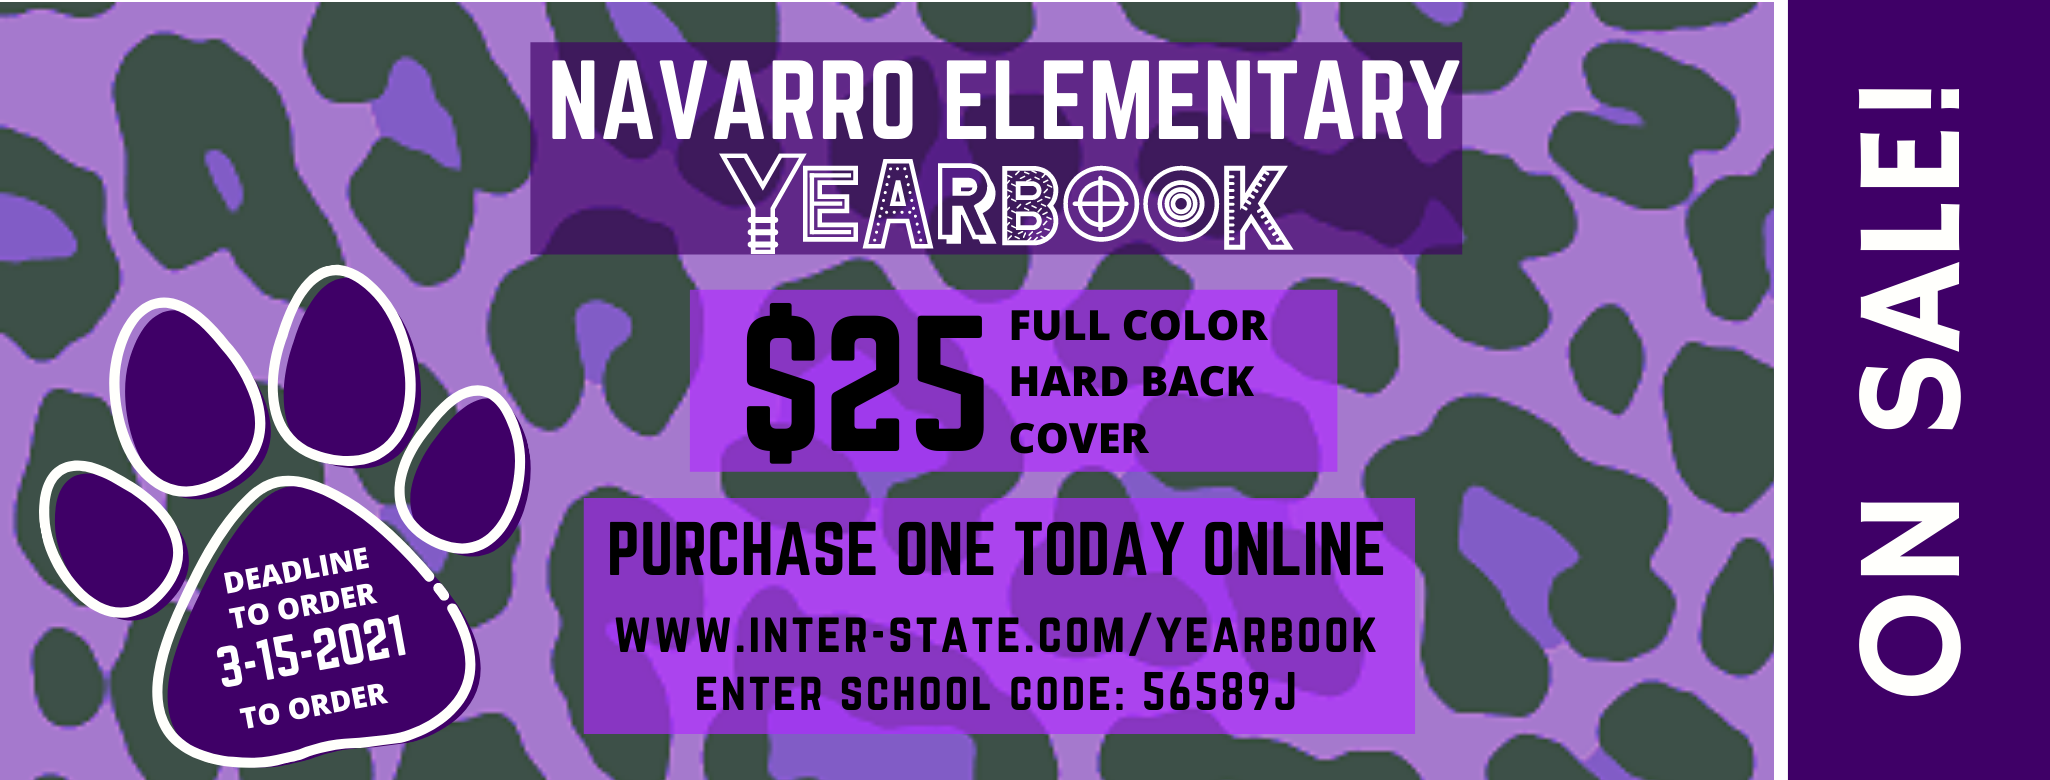 Yearbook Sales $25